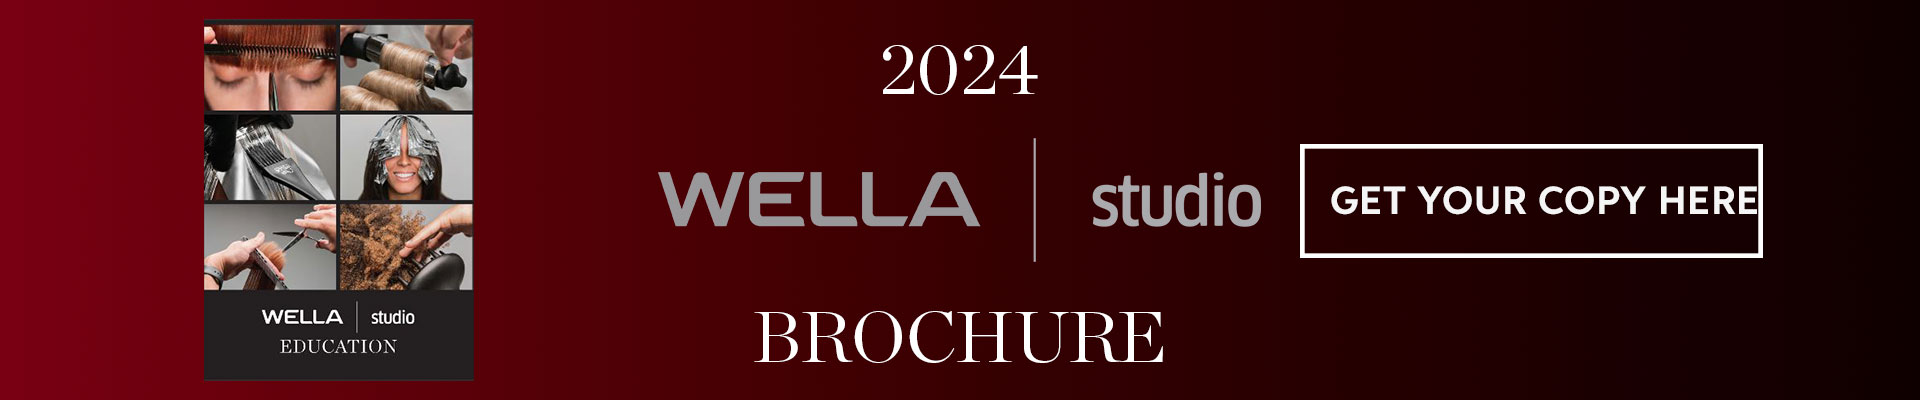 Wella Studio Brochure 2025 